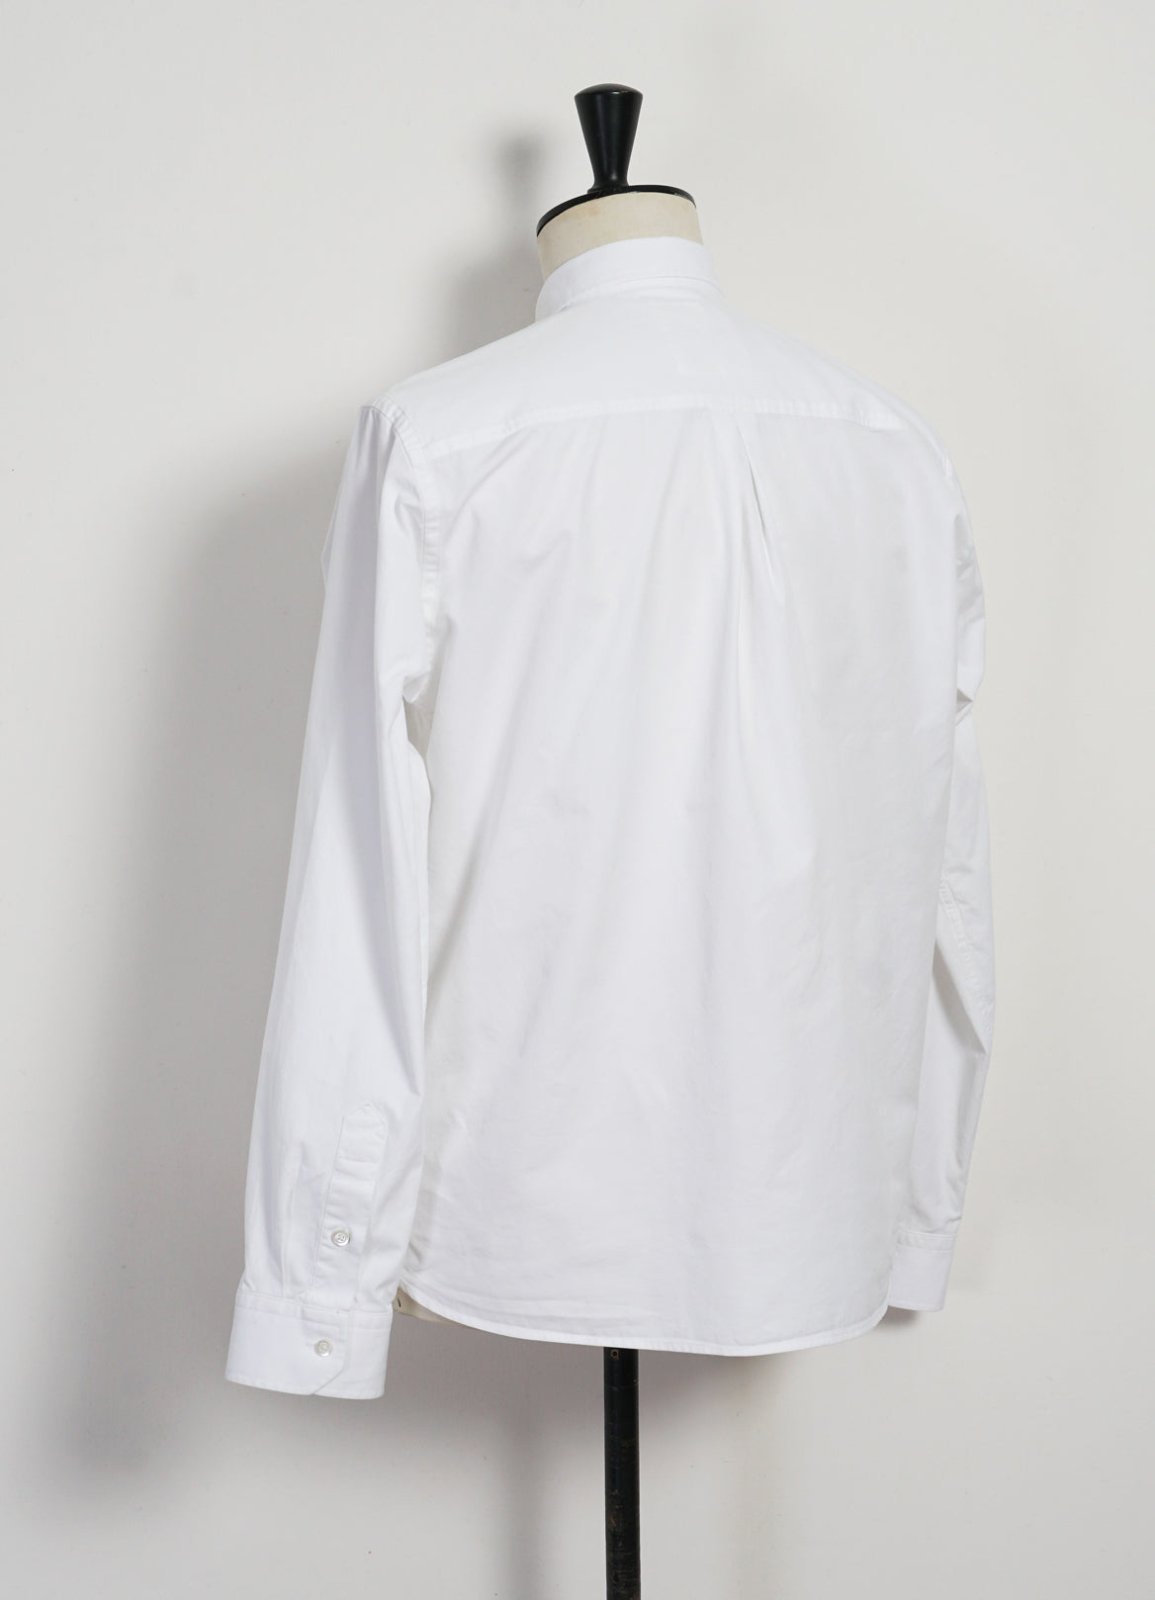 HANSEN GARMENTS - RAYMOND | Relaxed Classic Shirt | White - HANSEN Garments